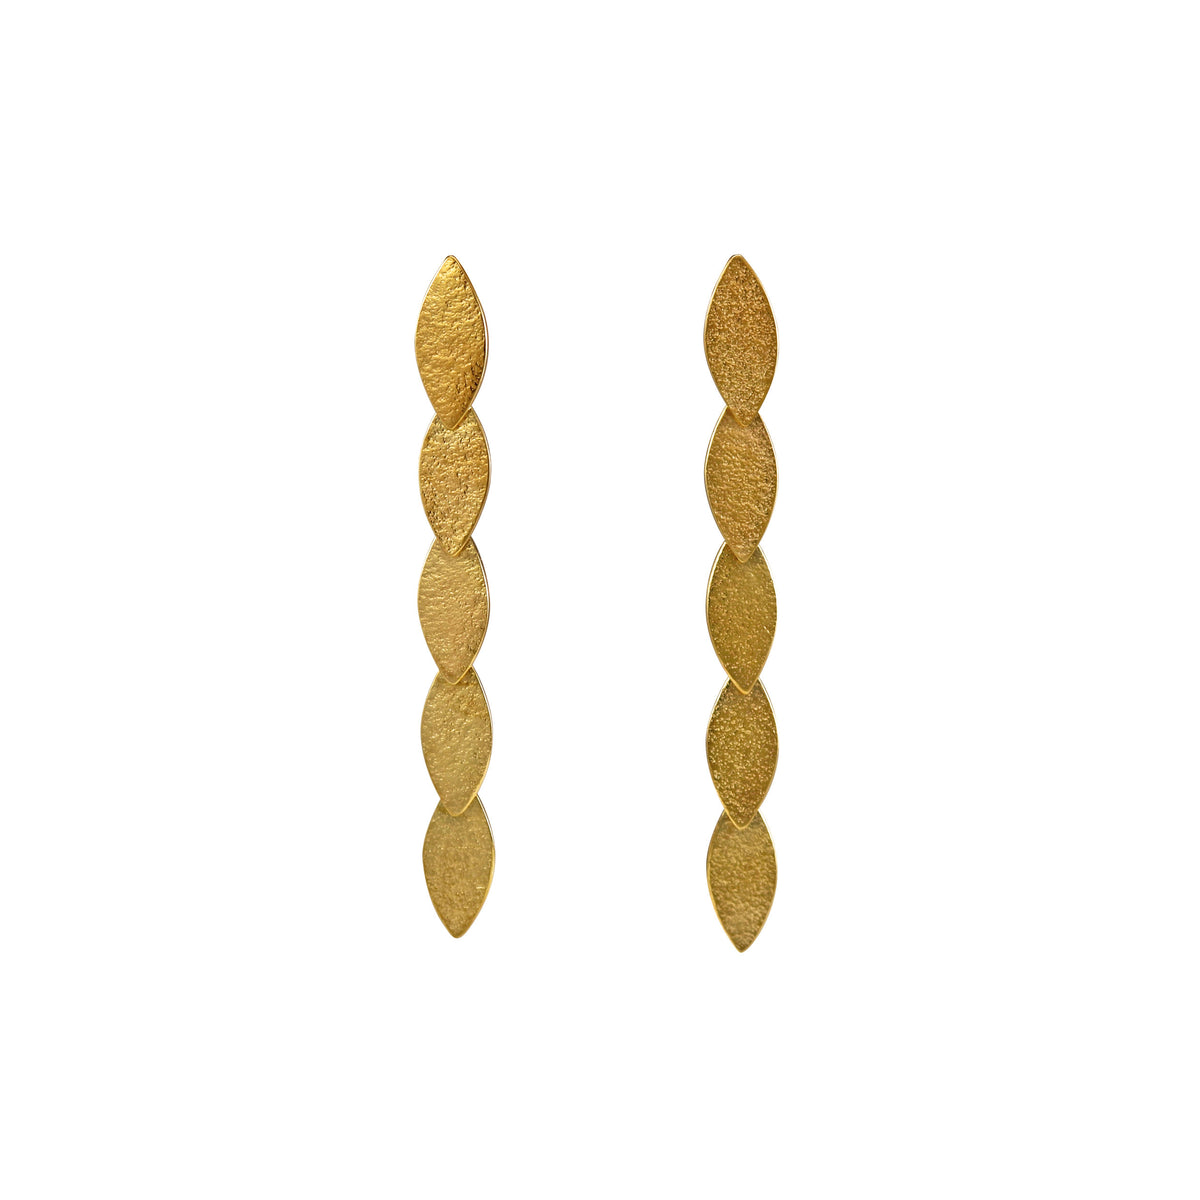 gold drop earrings by Cara Tonkin